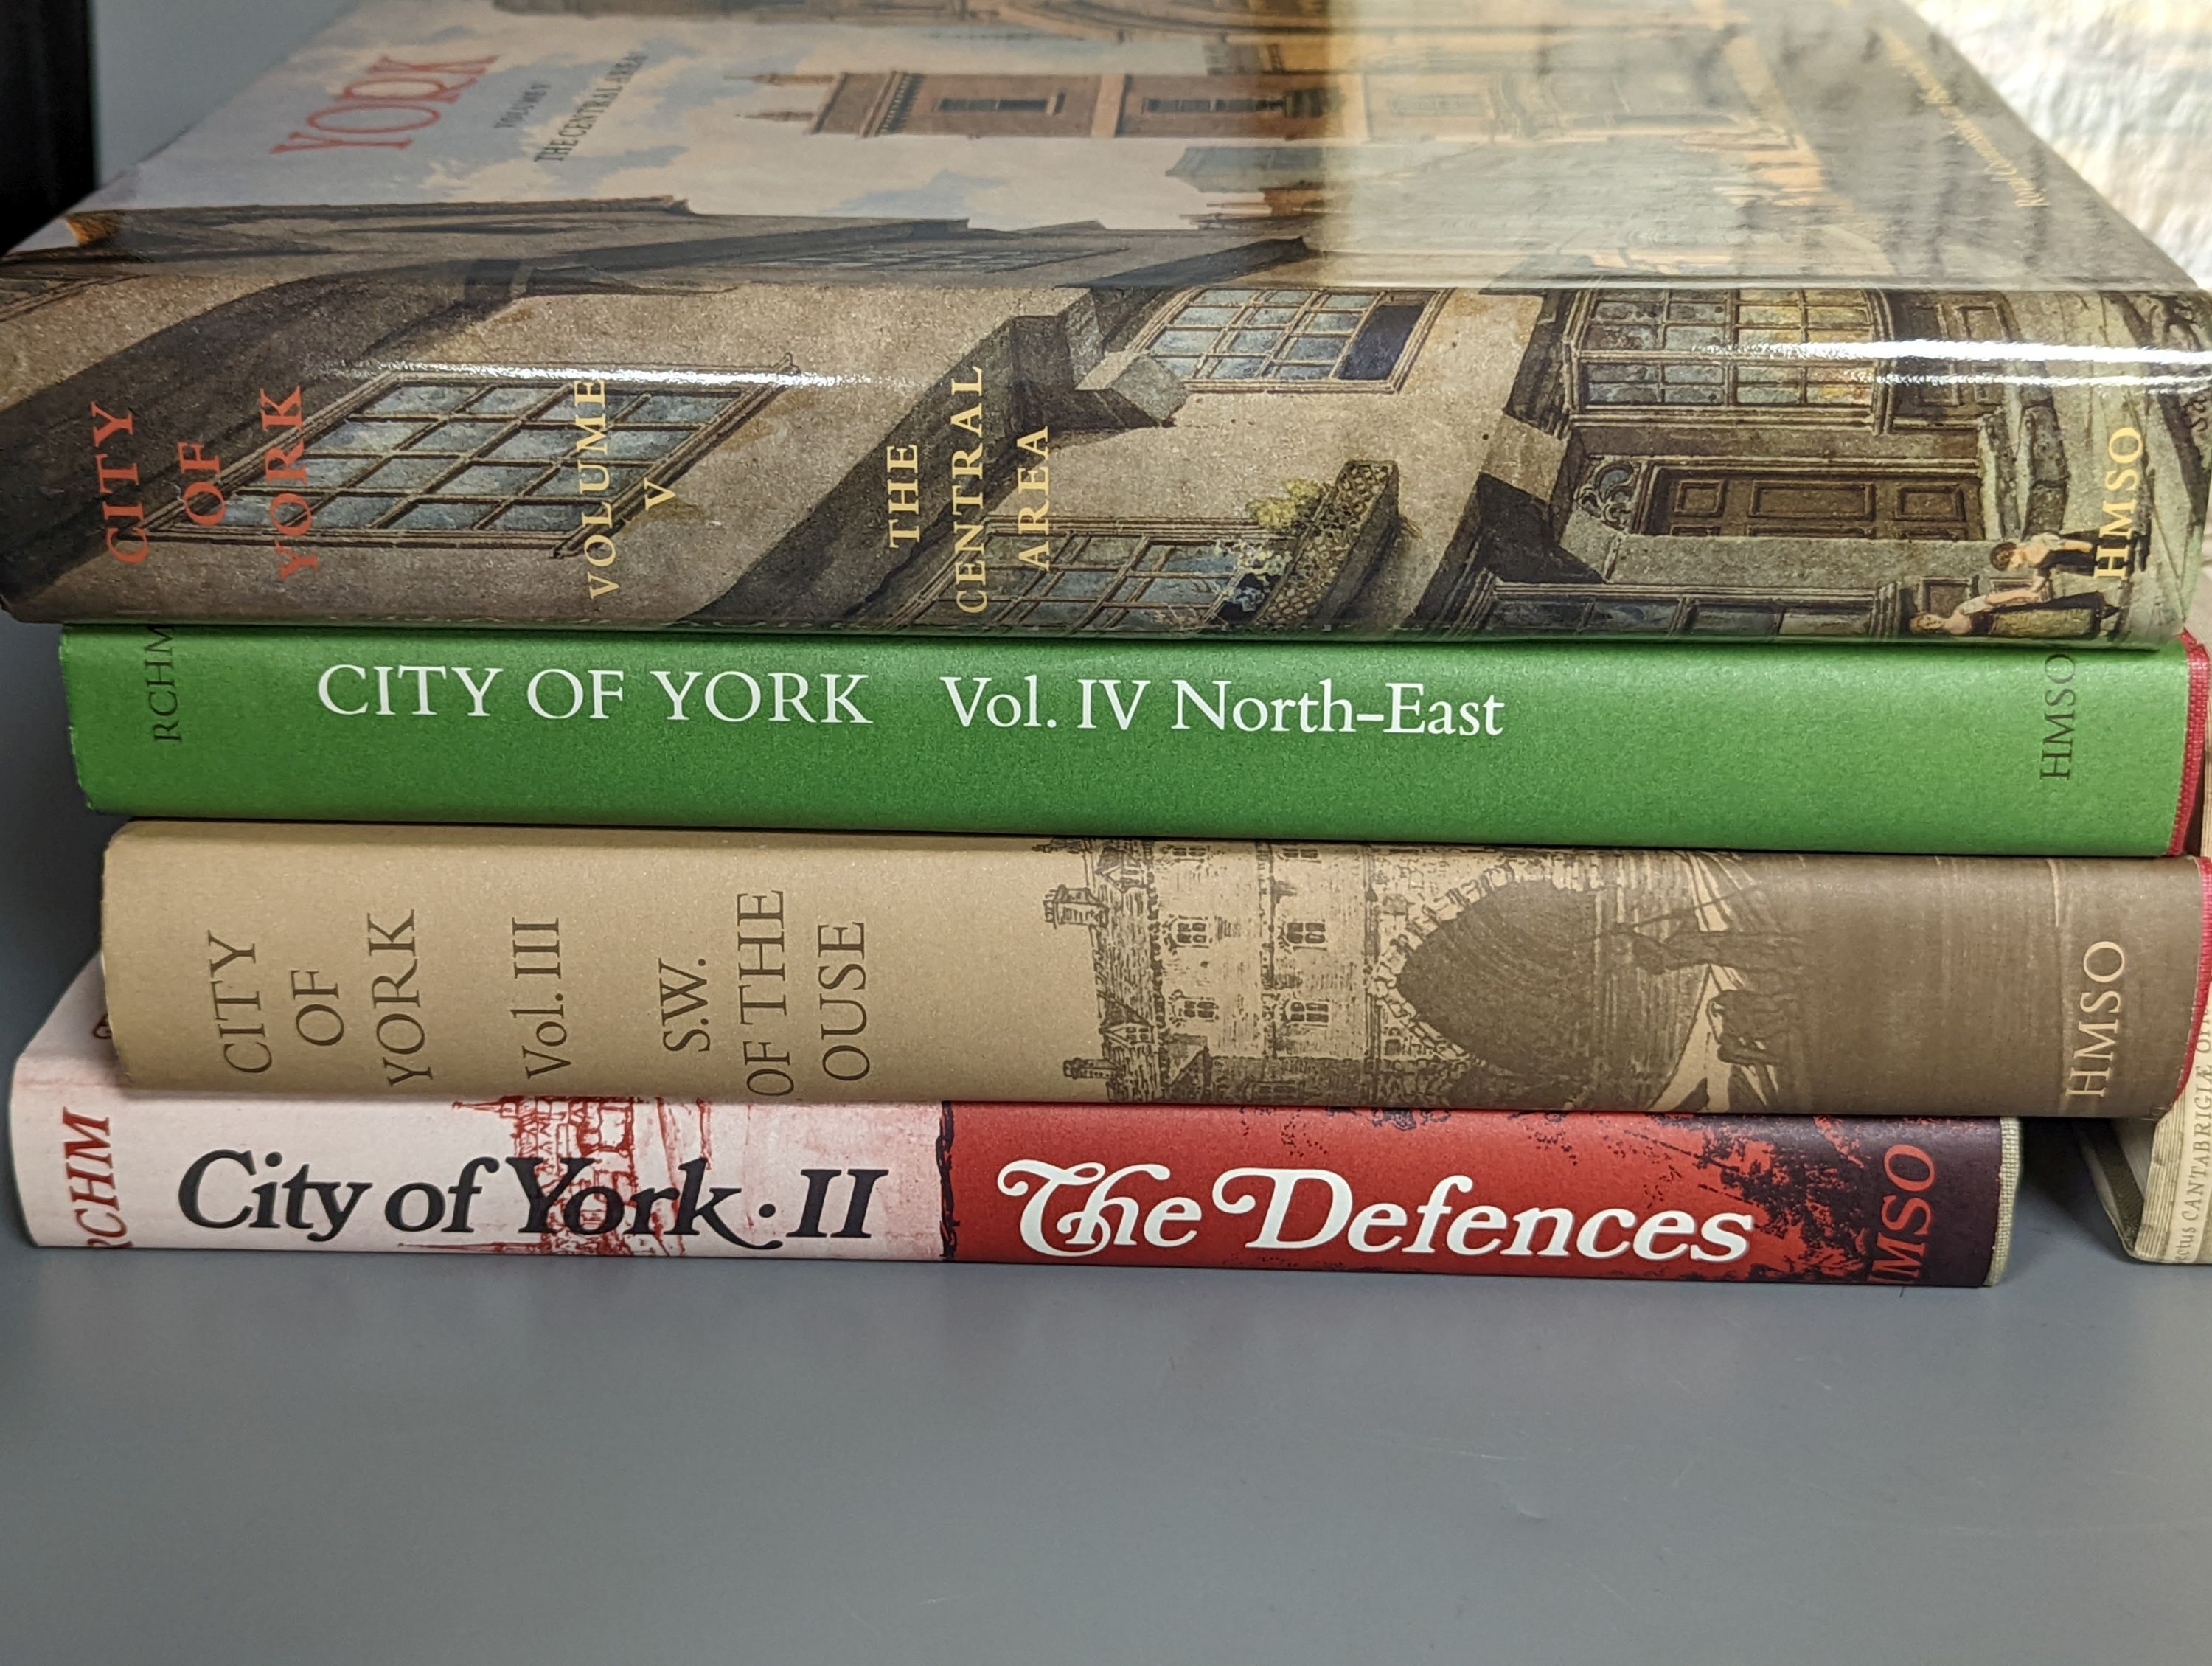 Seven books on City of York